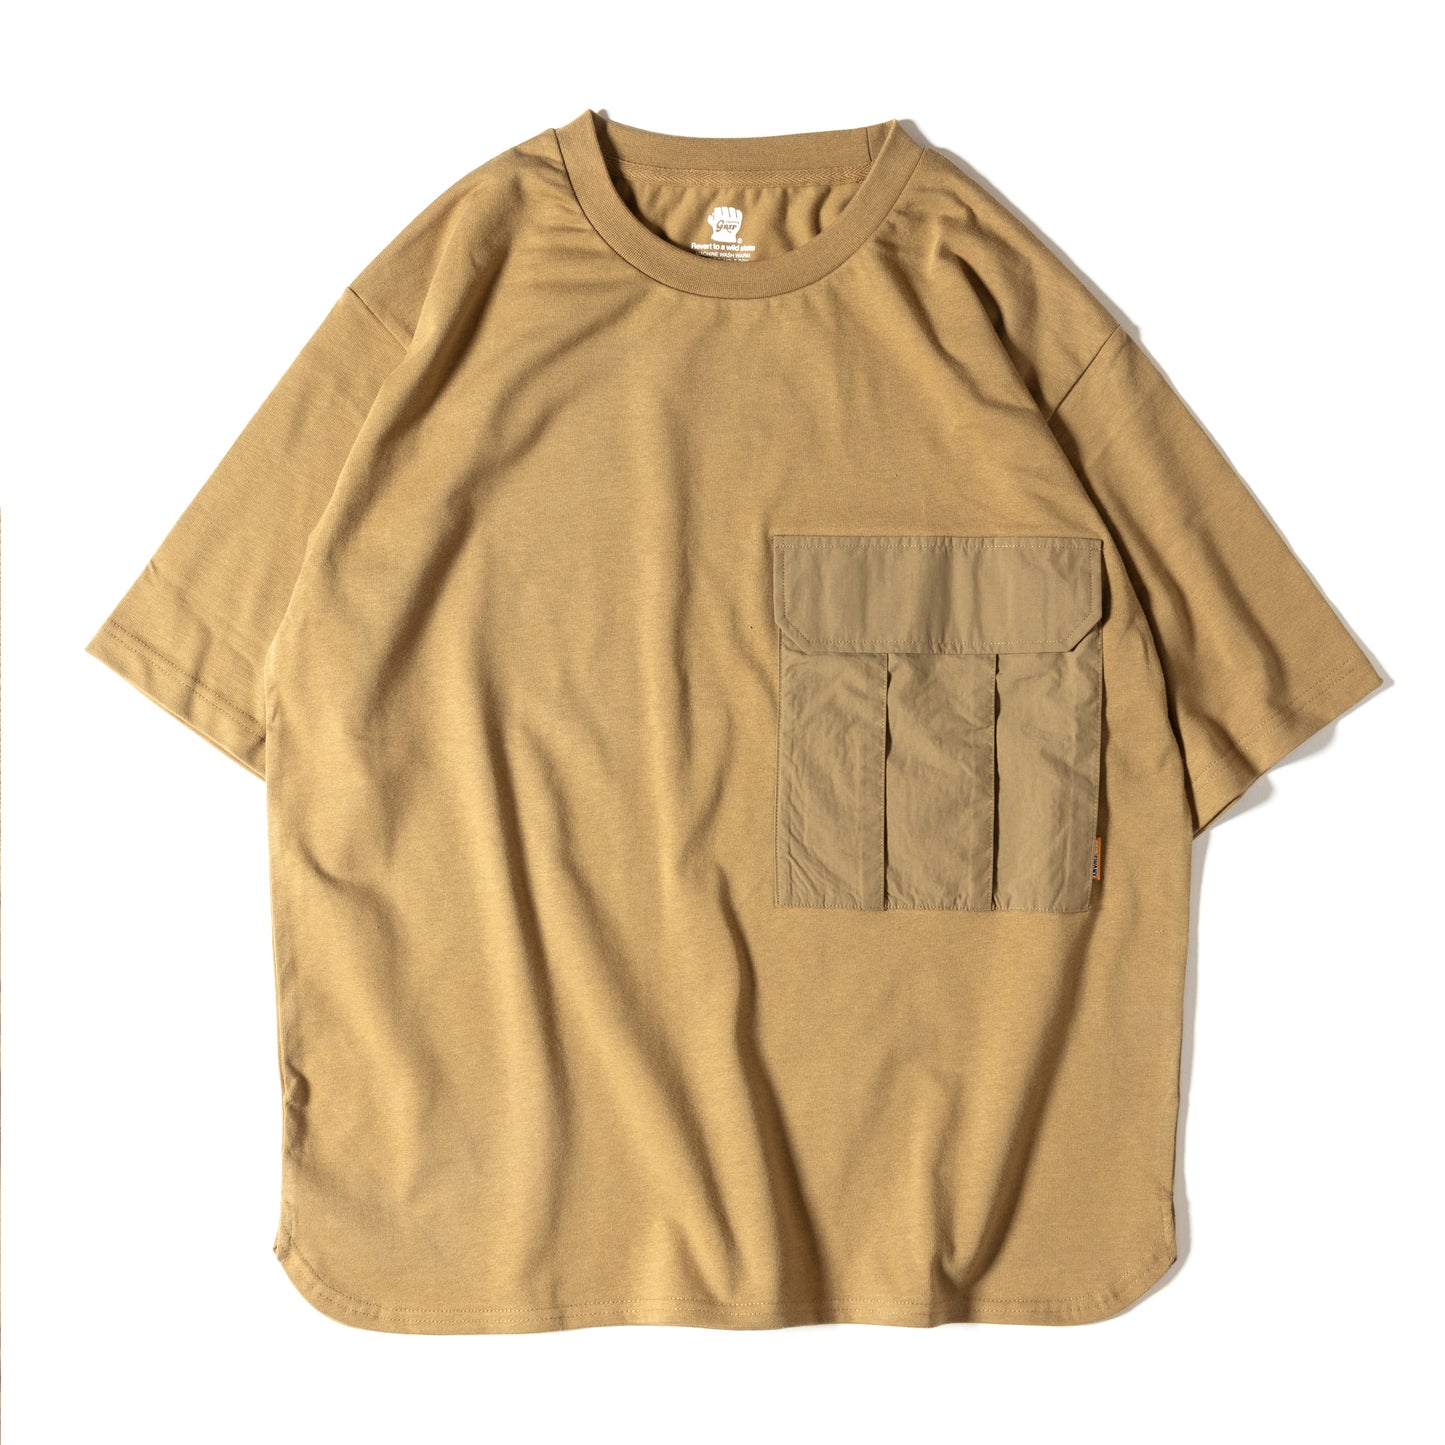 GRIP SWANY x Helinox T-shirt - SOIL